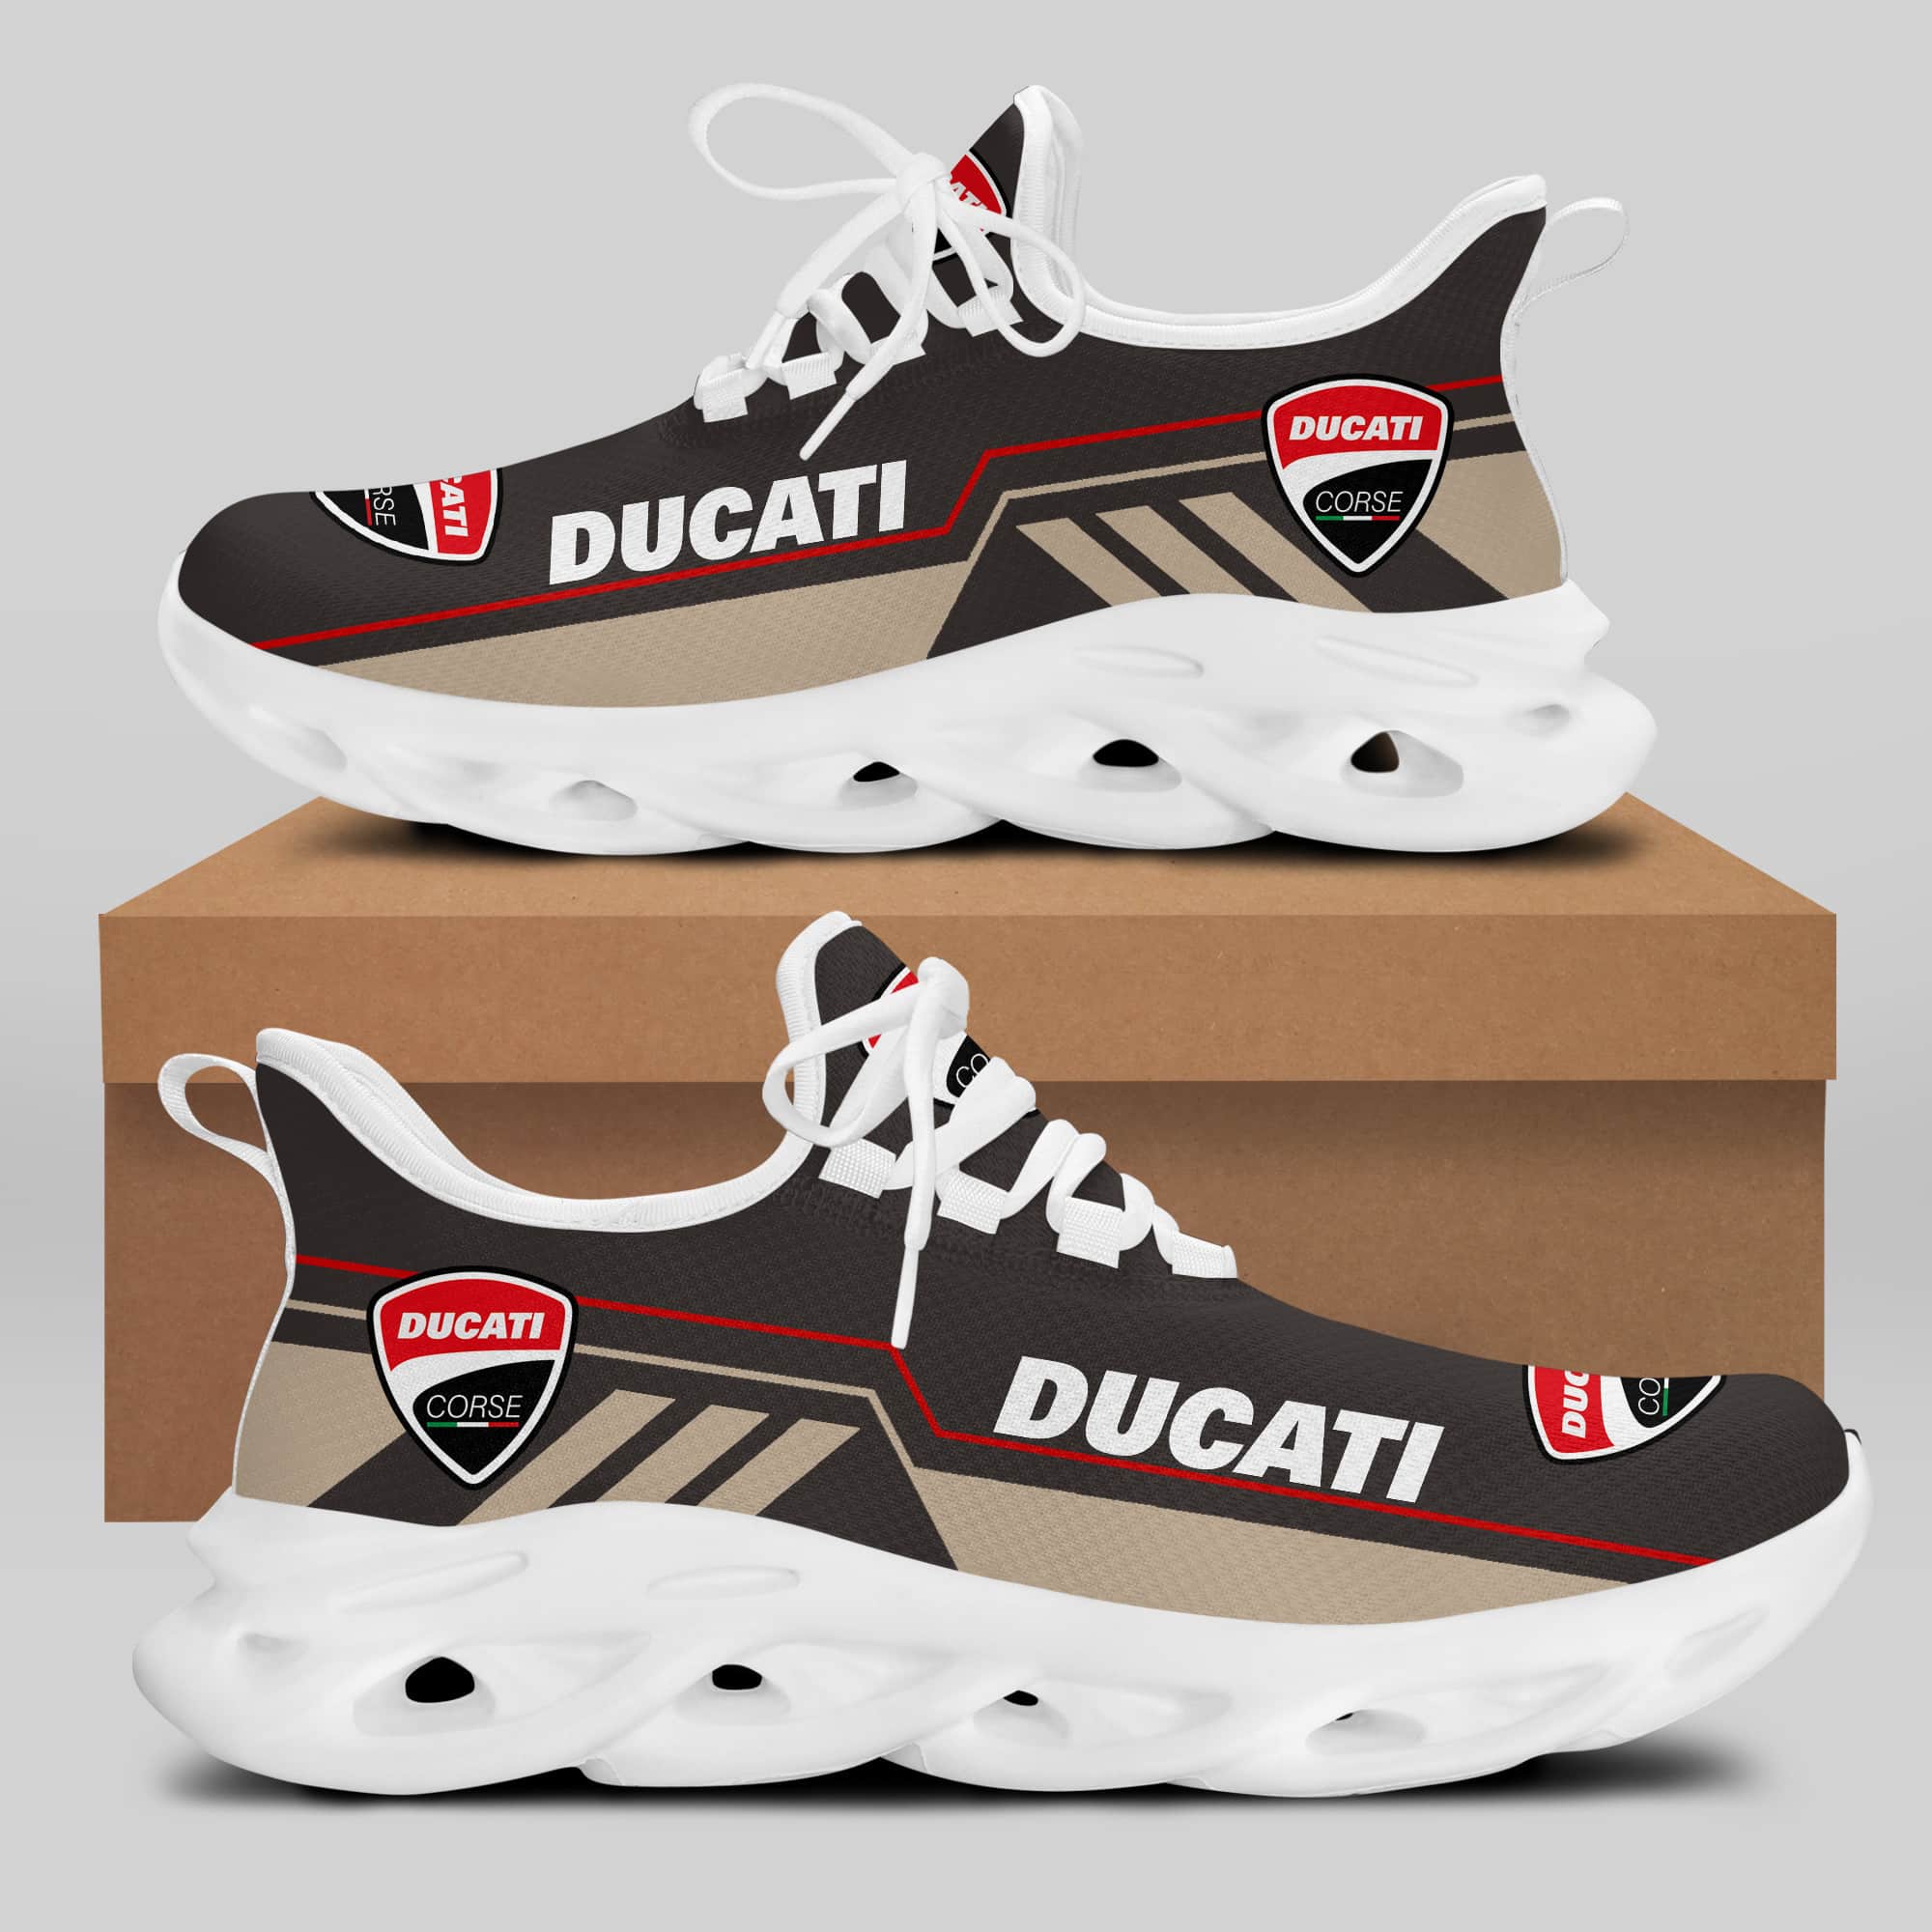 Ducati Racing Running Shoes Max Soul Shoes Sneakers Ver 23 2